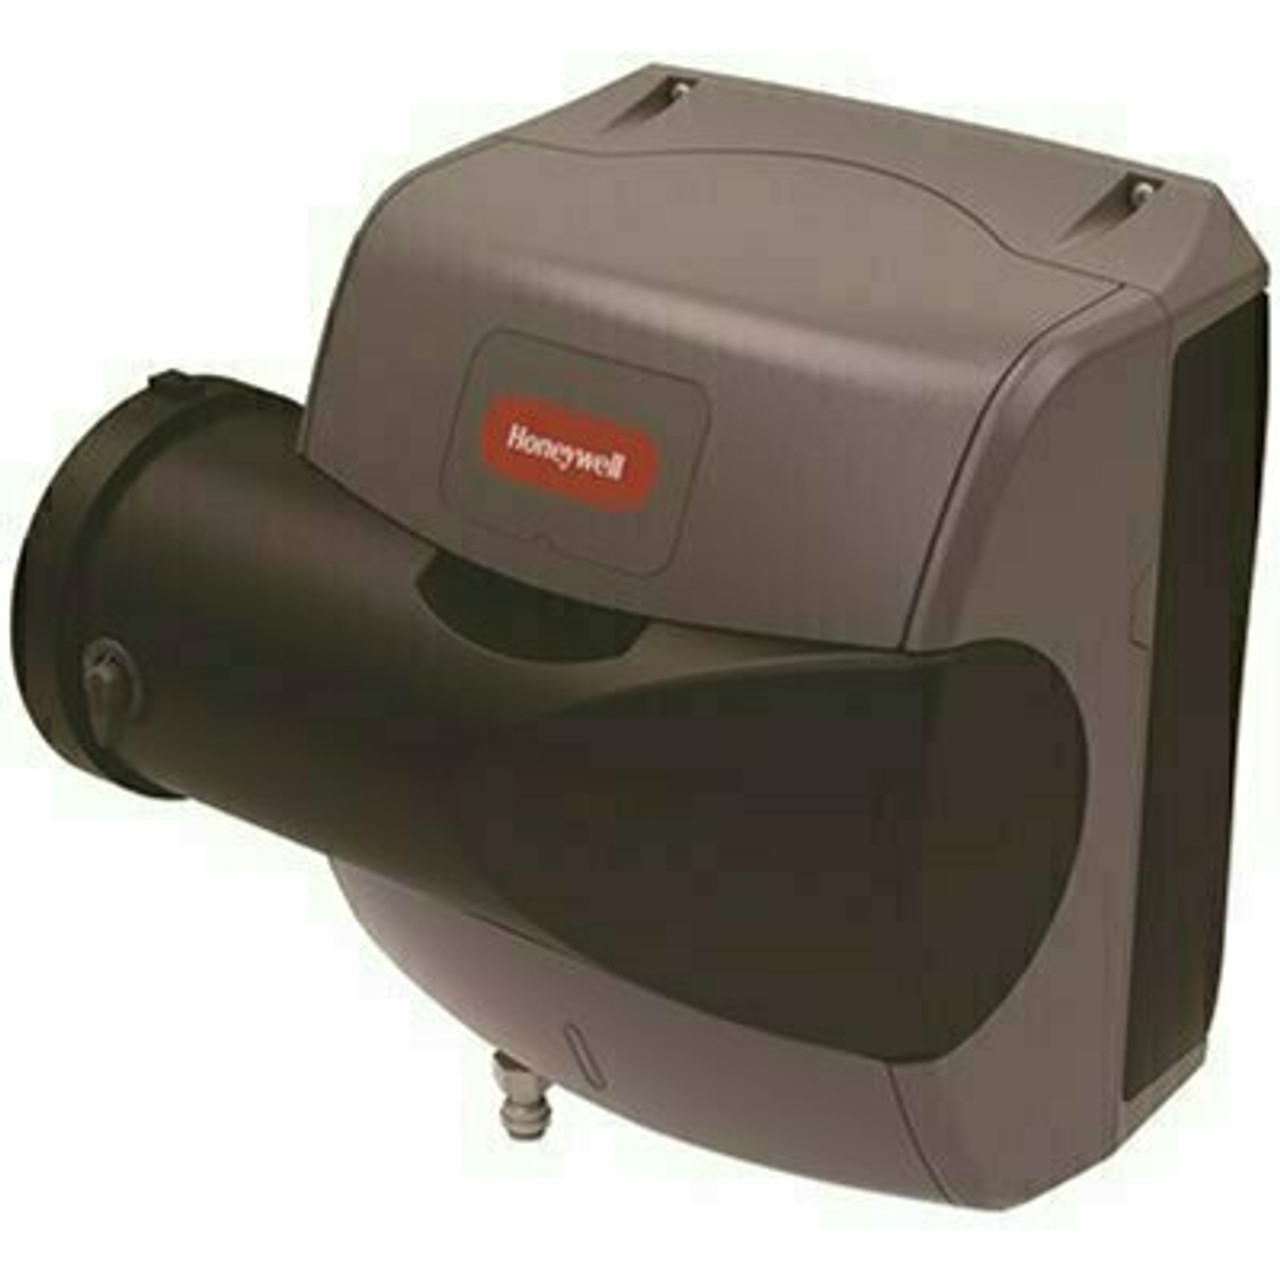 Honeywell Truease Small Basic Bypass Humidifier